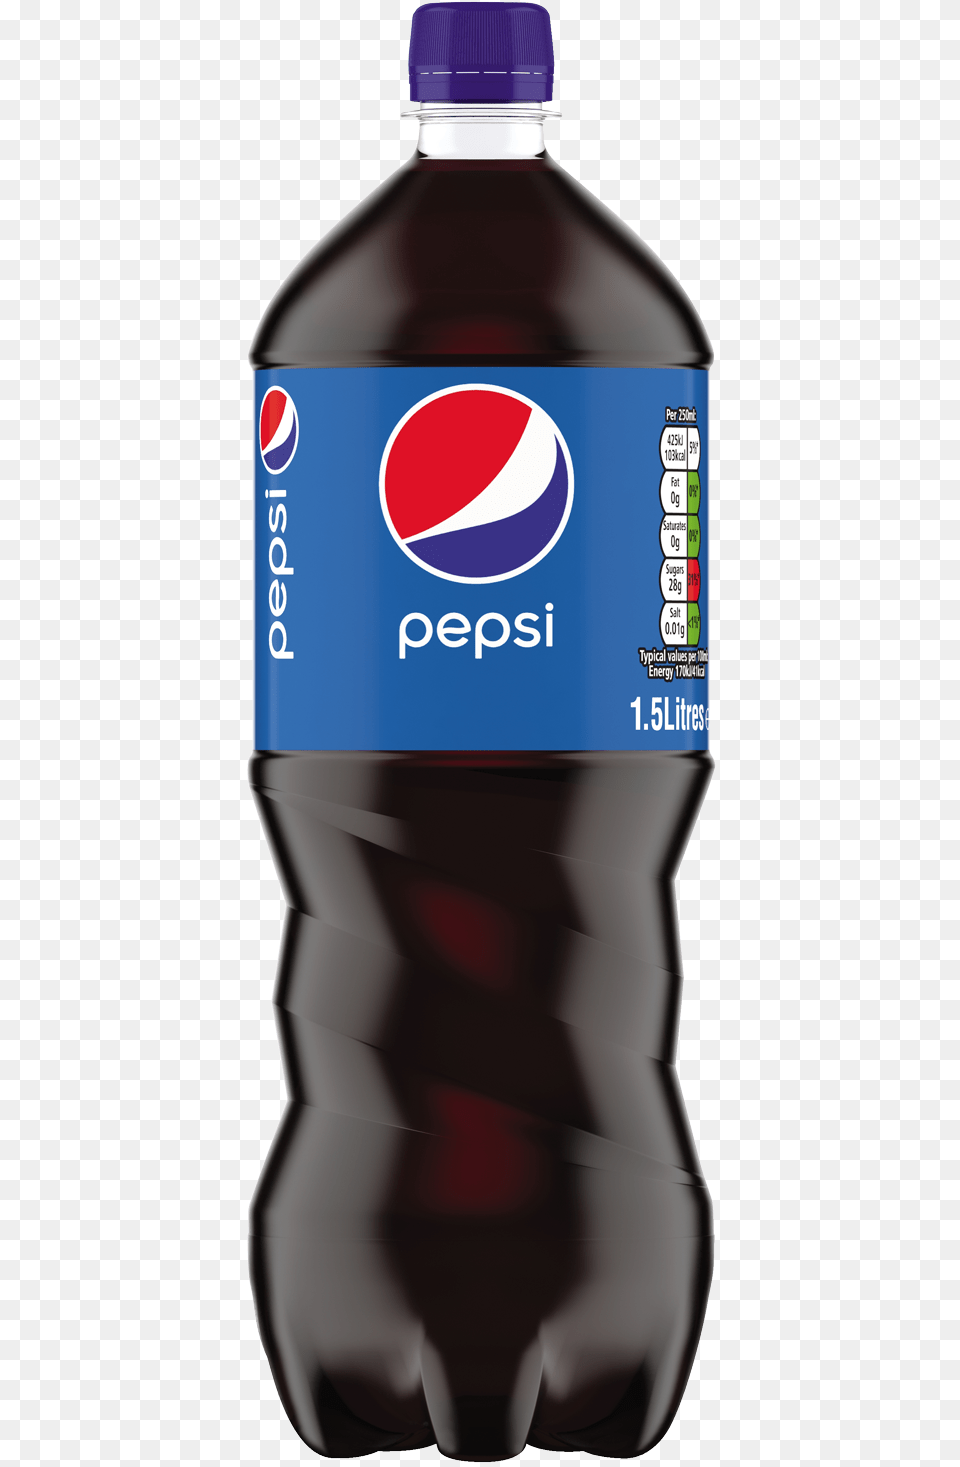 Pepsi Bottle Pepsi Max 15 L, Beverage, Soda, Coke, Shaker Png Image